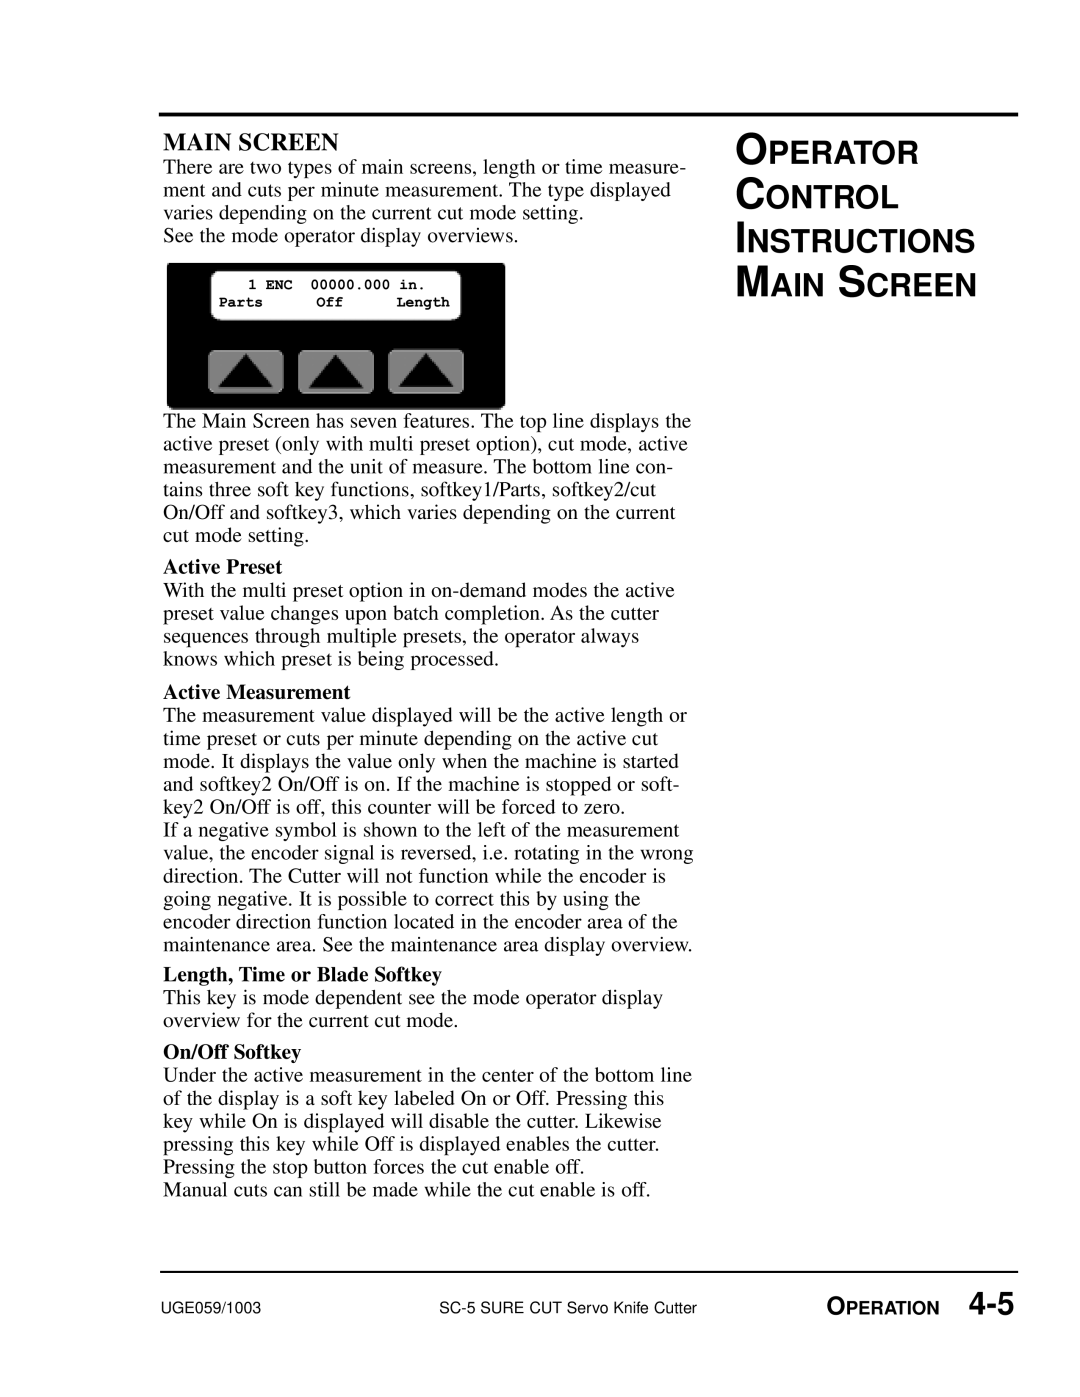 Conair SC-5 manual Parts1ENC00000Off.000in, Operator Control Instructions Main Screen, Active Preset, Active Measurement 